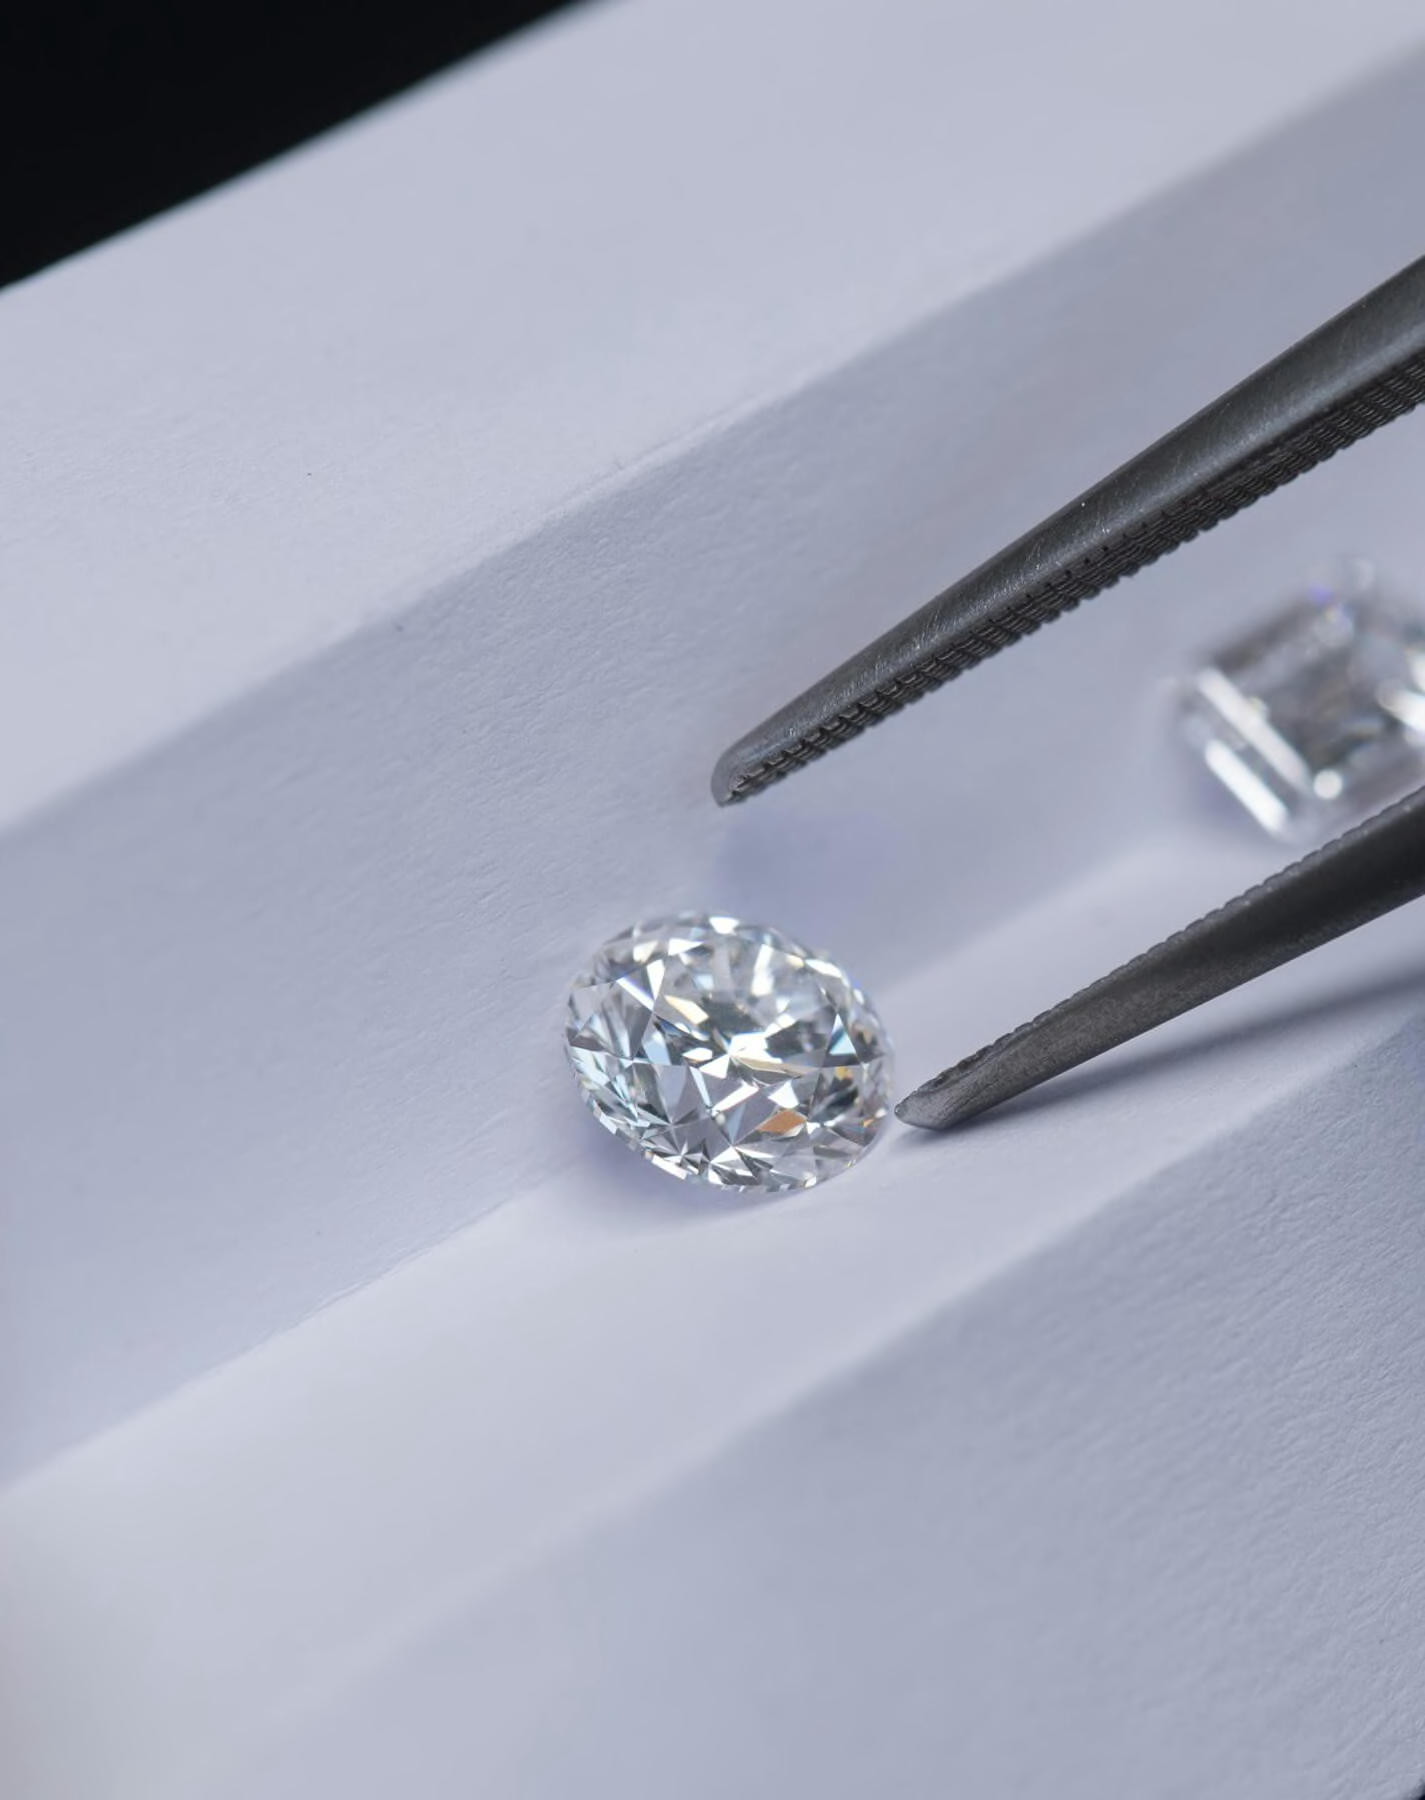 Close up of a round diamond